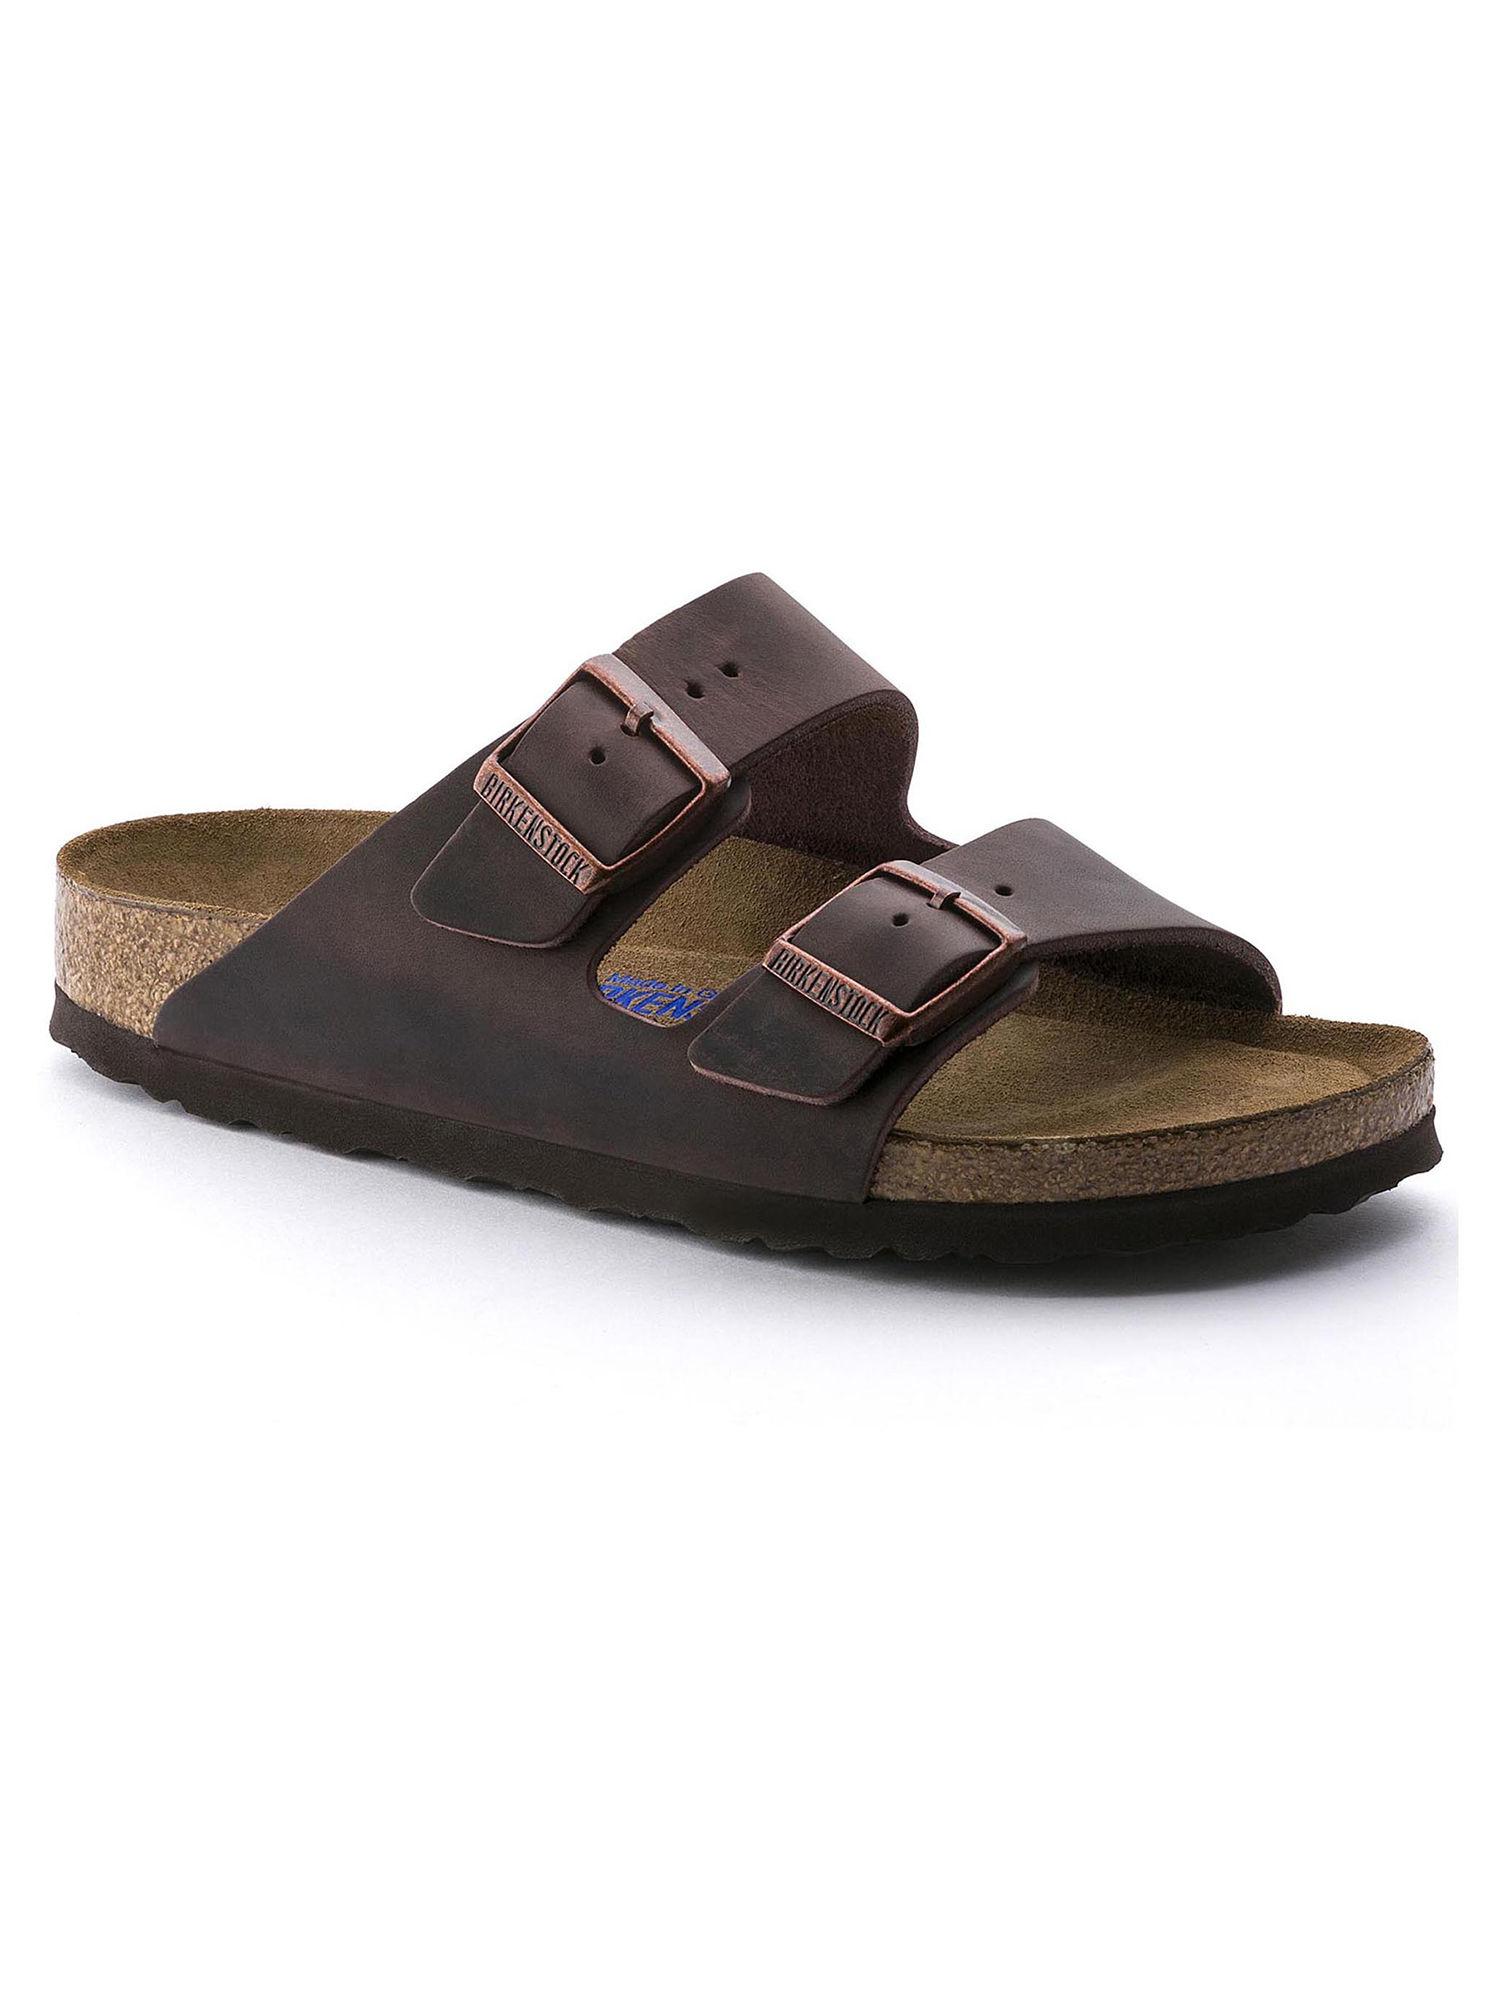 arizona-soft-footbed-oiled-nubuck-leather-brown-narrow-unisex-sandal